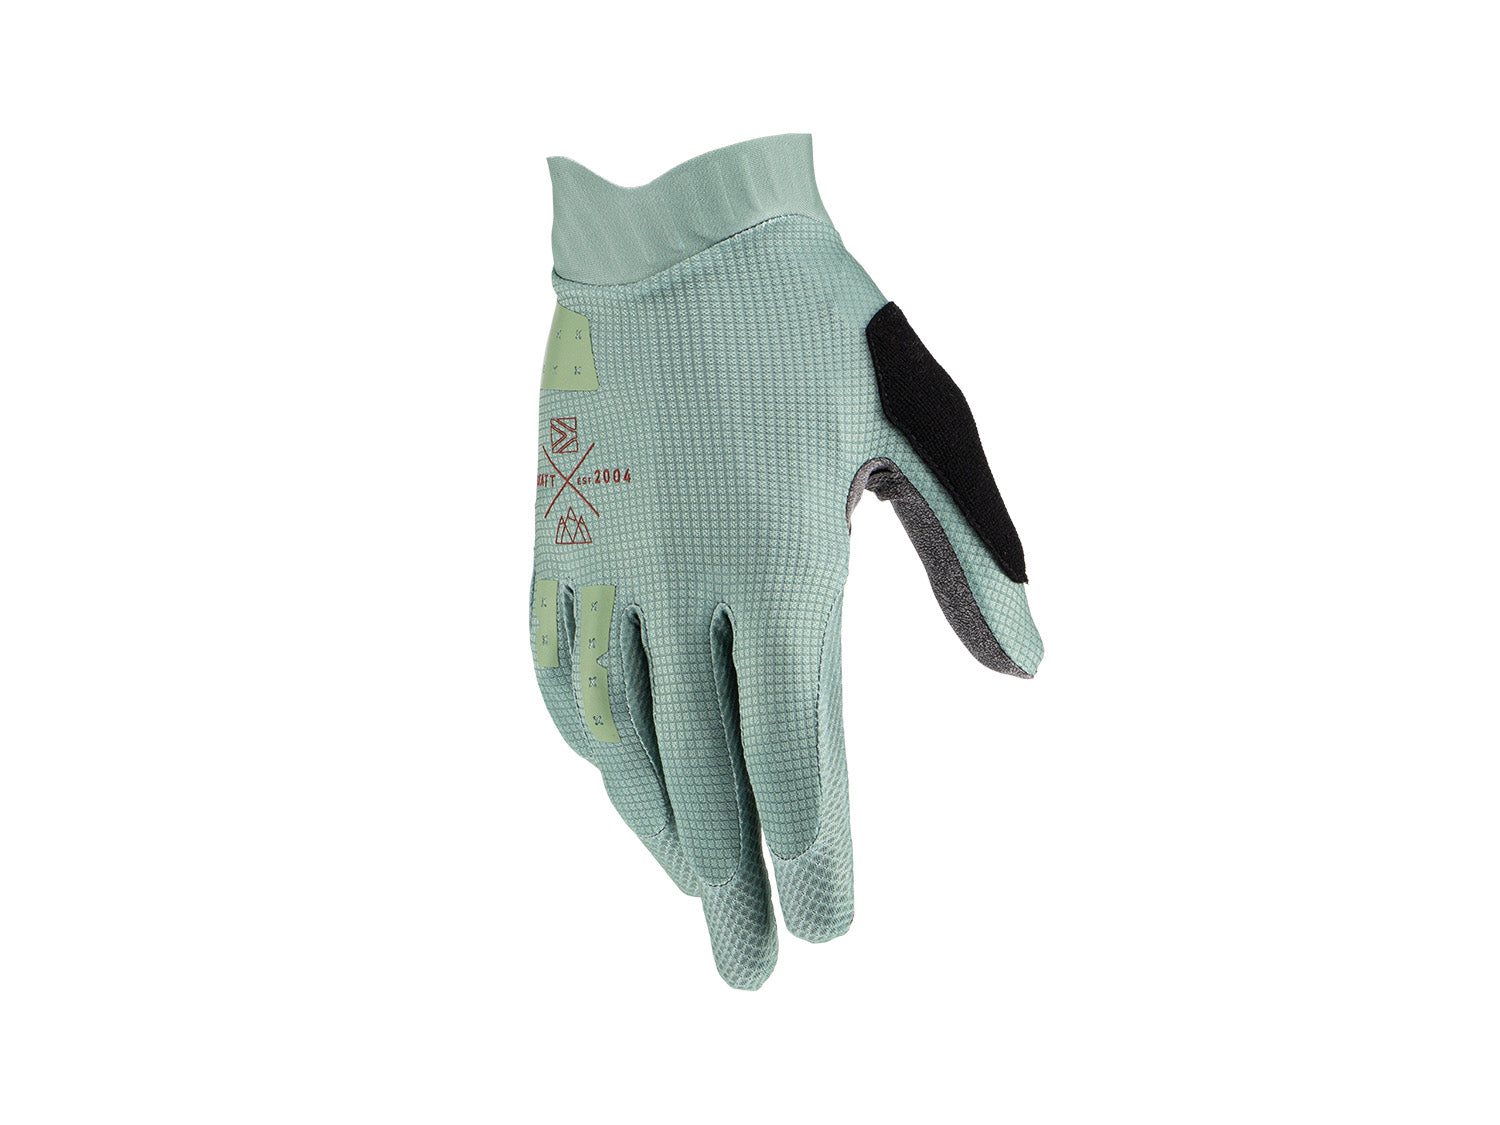 Leatt Glove MTB 1.0 GripR Women